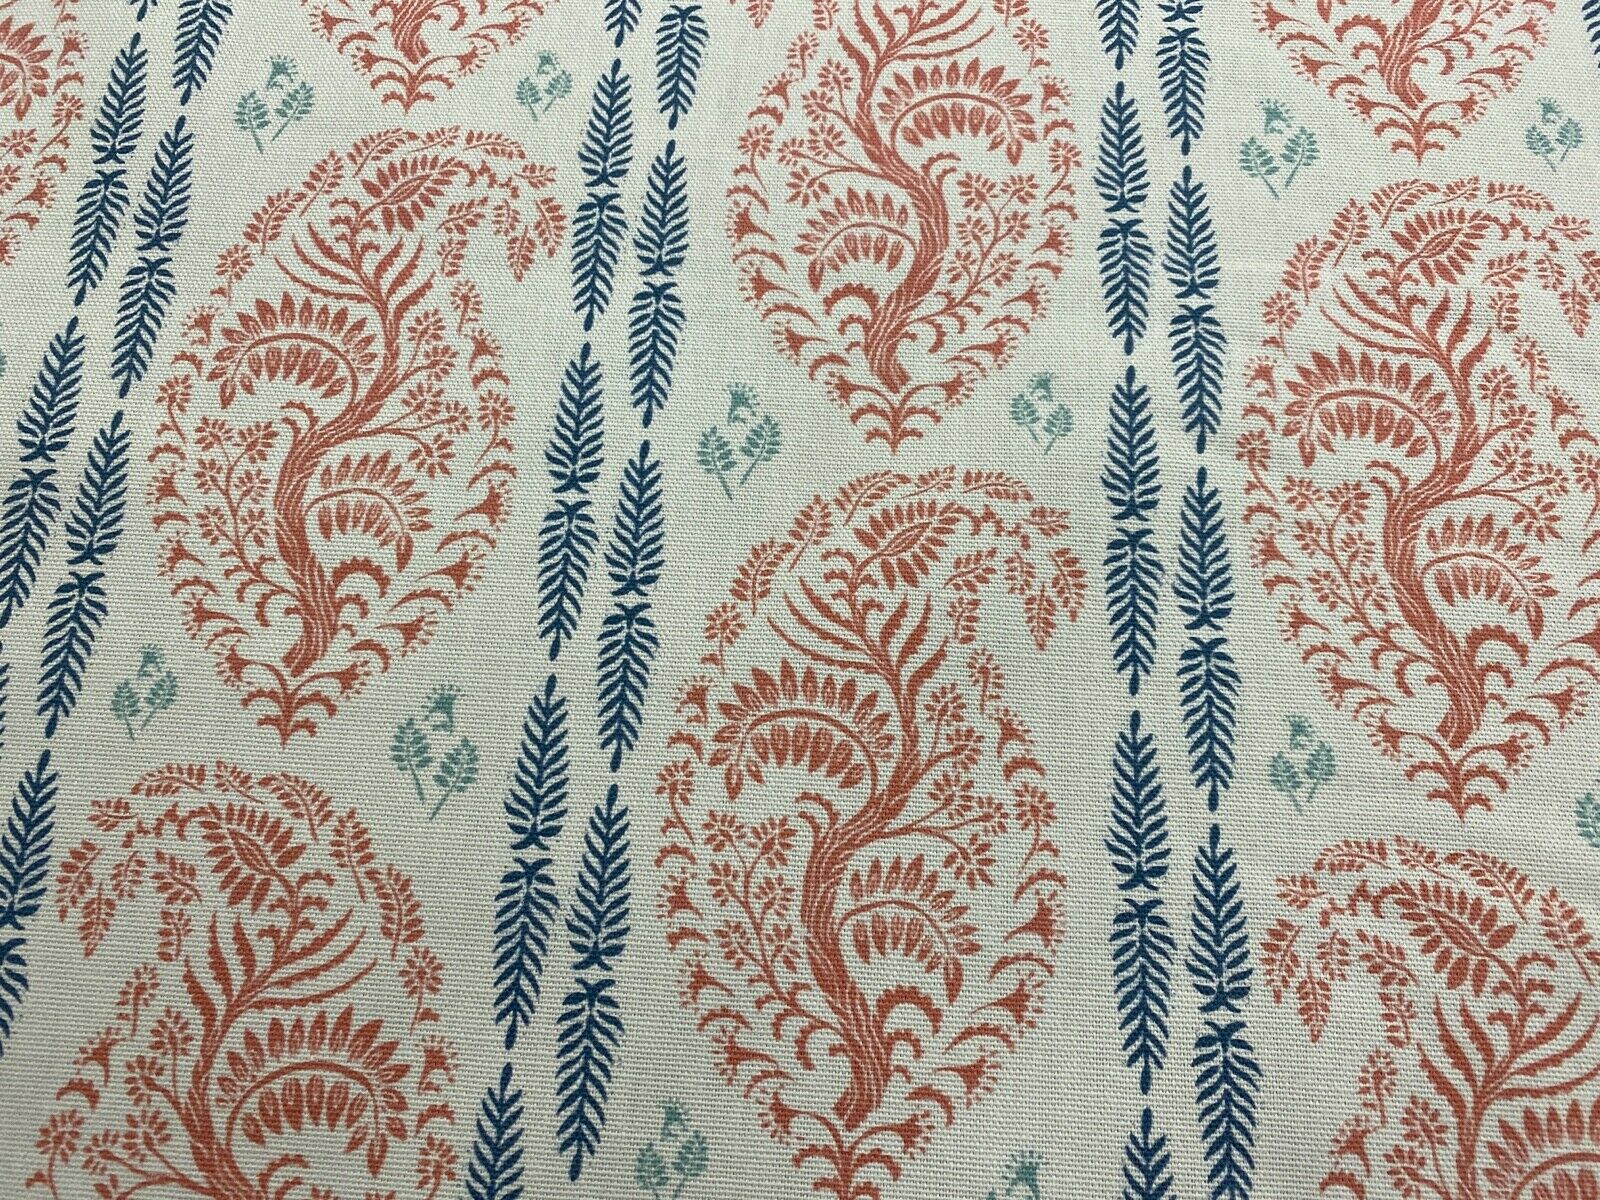 Perceval Paisley Regency Stripe Coral/Indigo/Ivory Cotton Curtain/Craft Fabric 